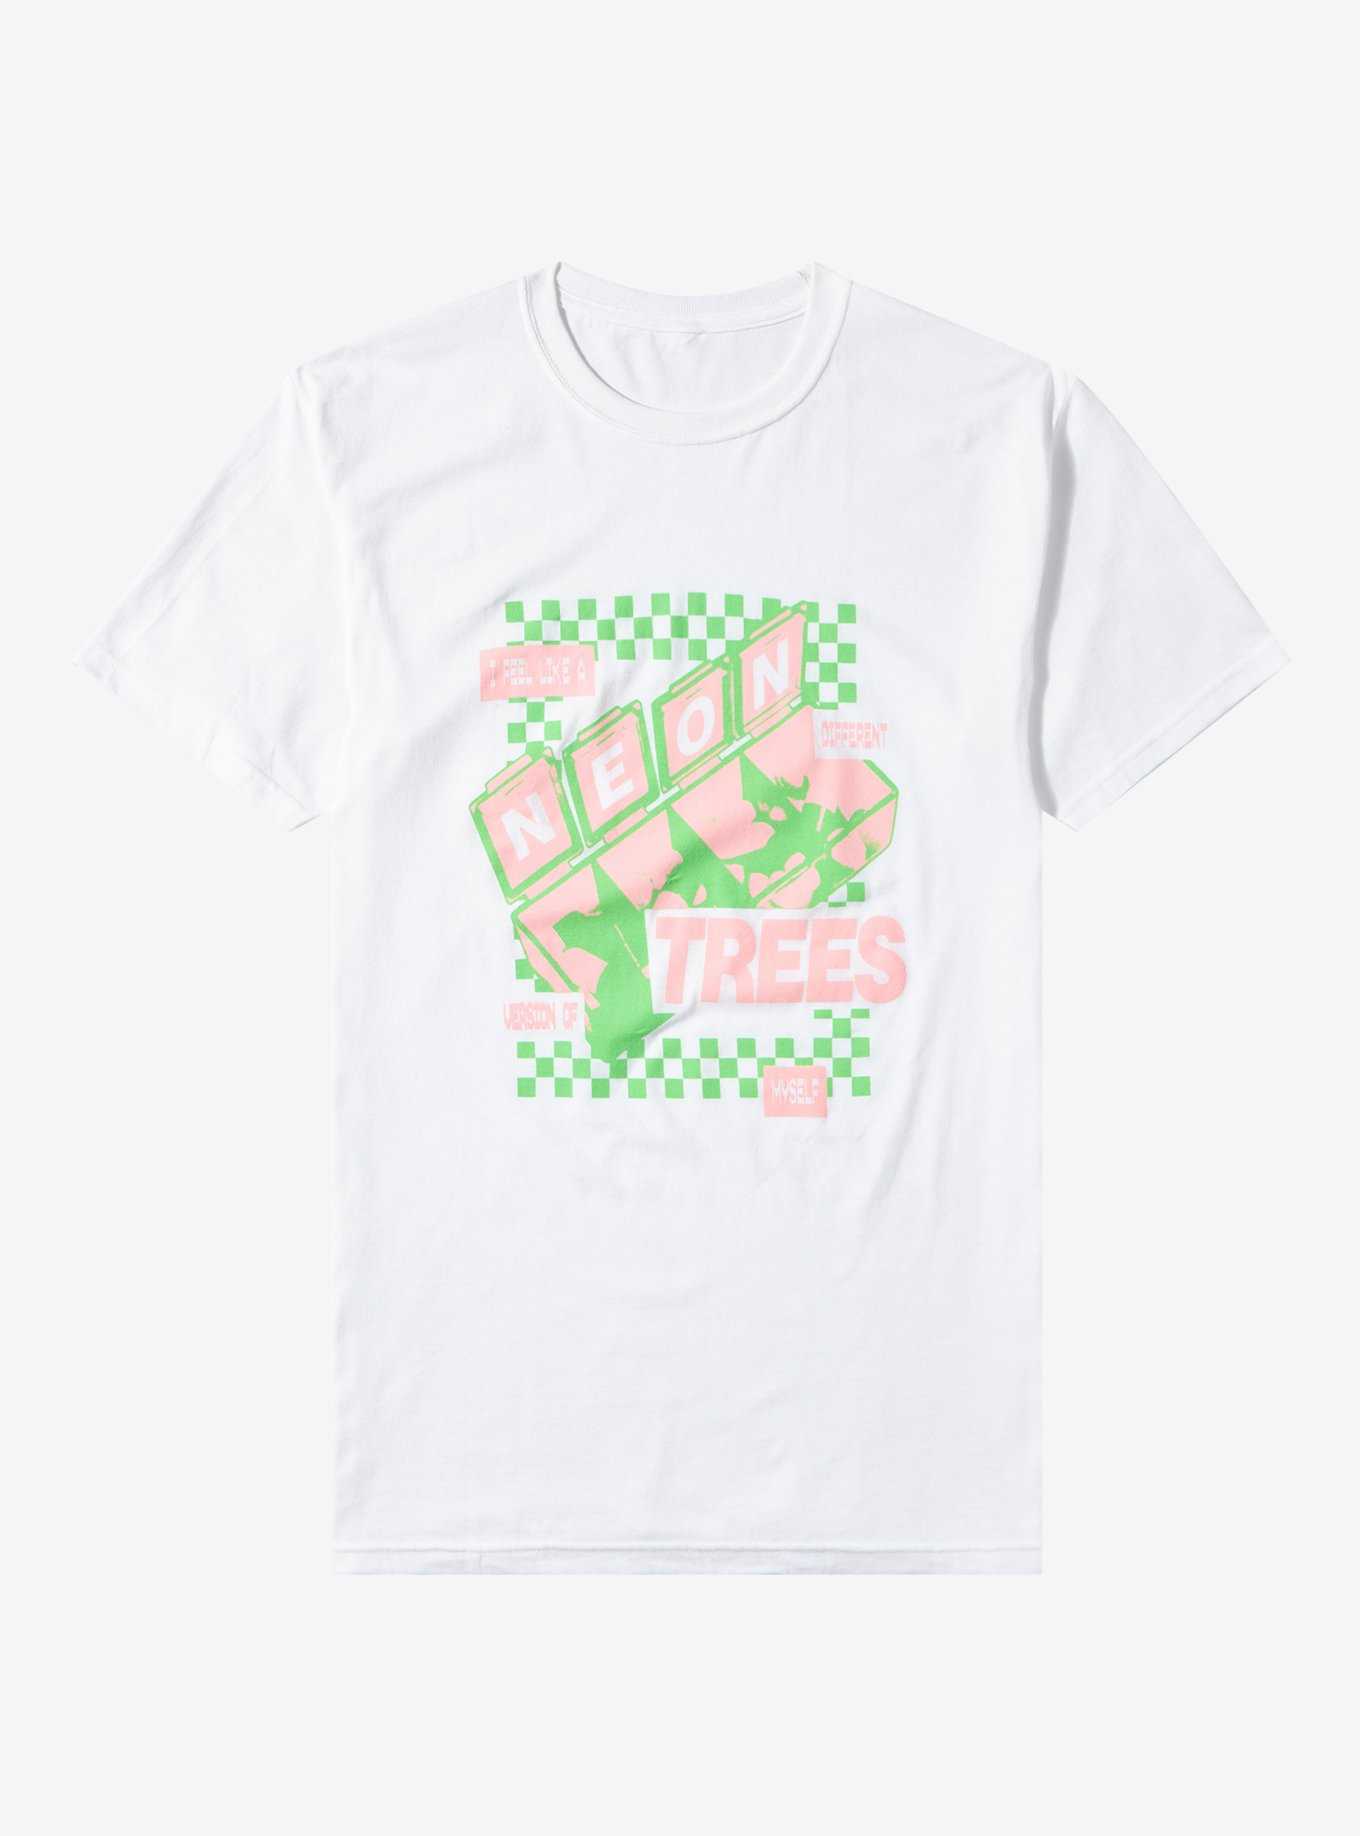 Neon Trees Pill Box Boyfriend Fit Girls T-Shirt, , hi-res